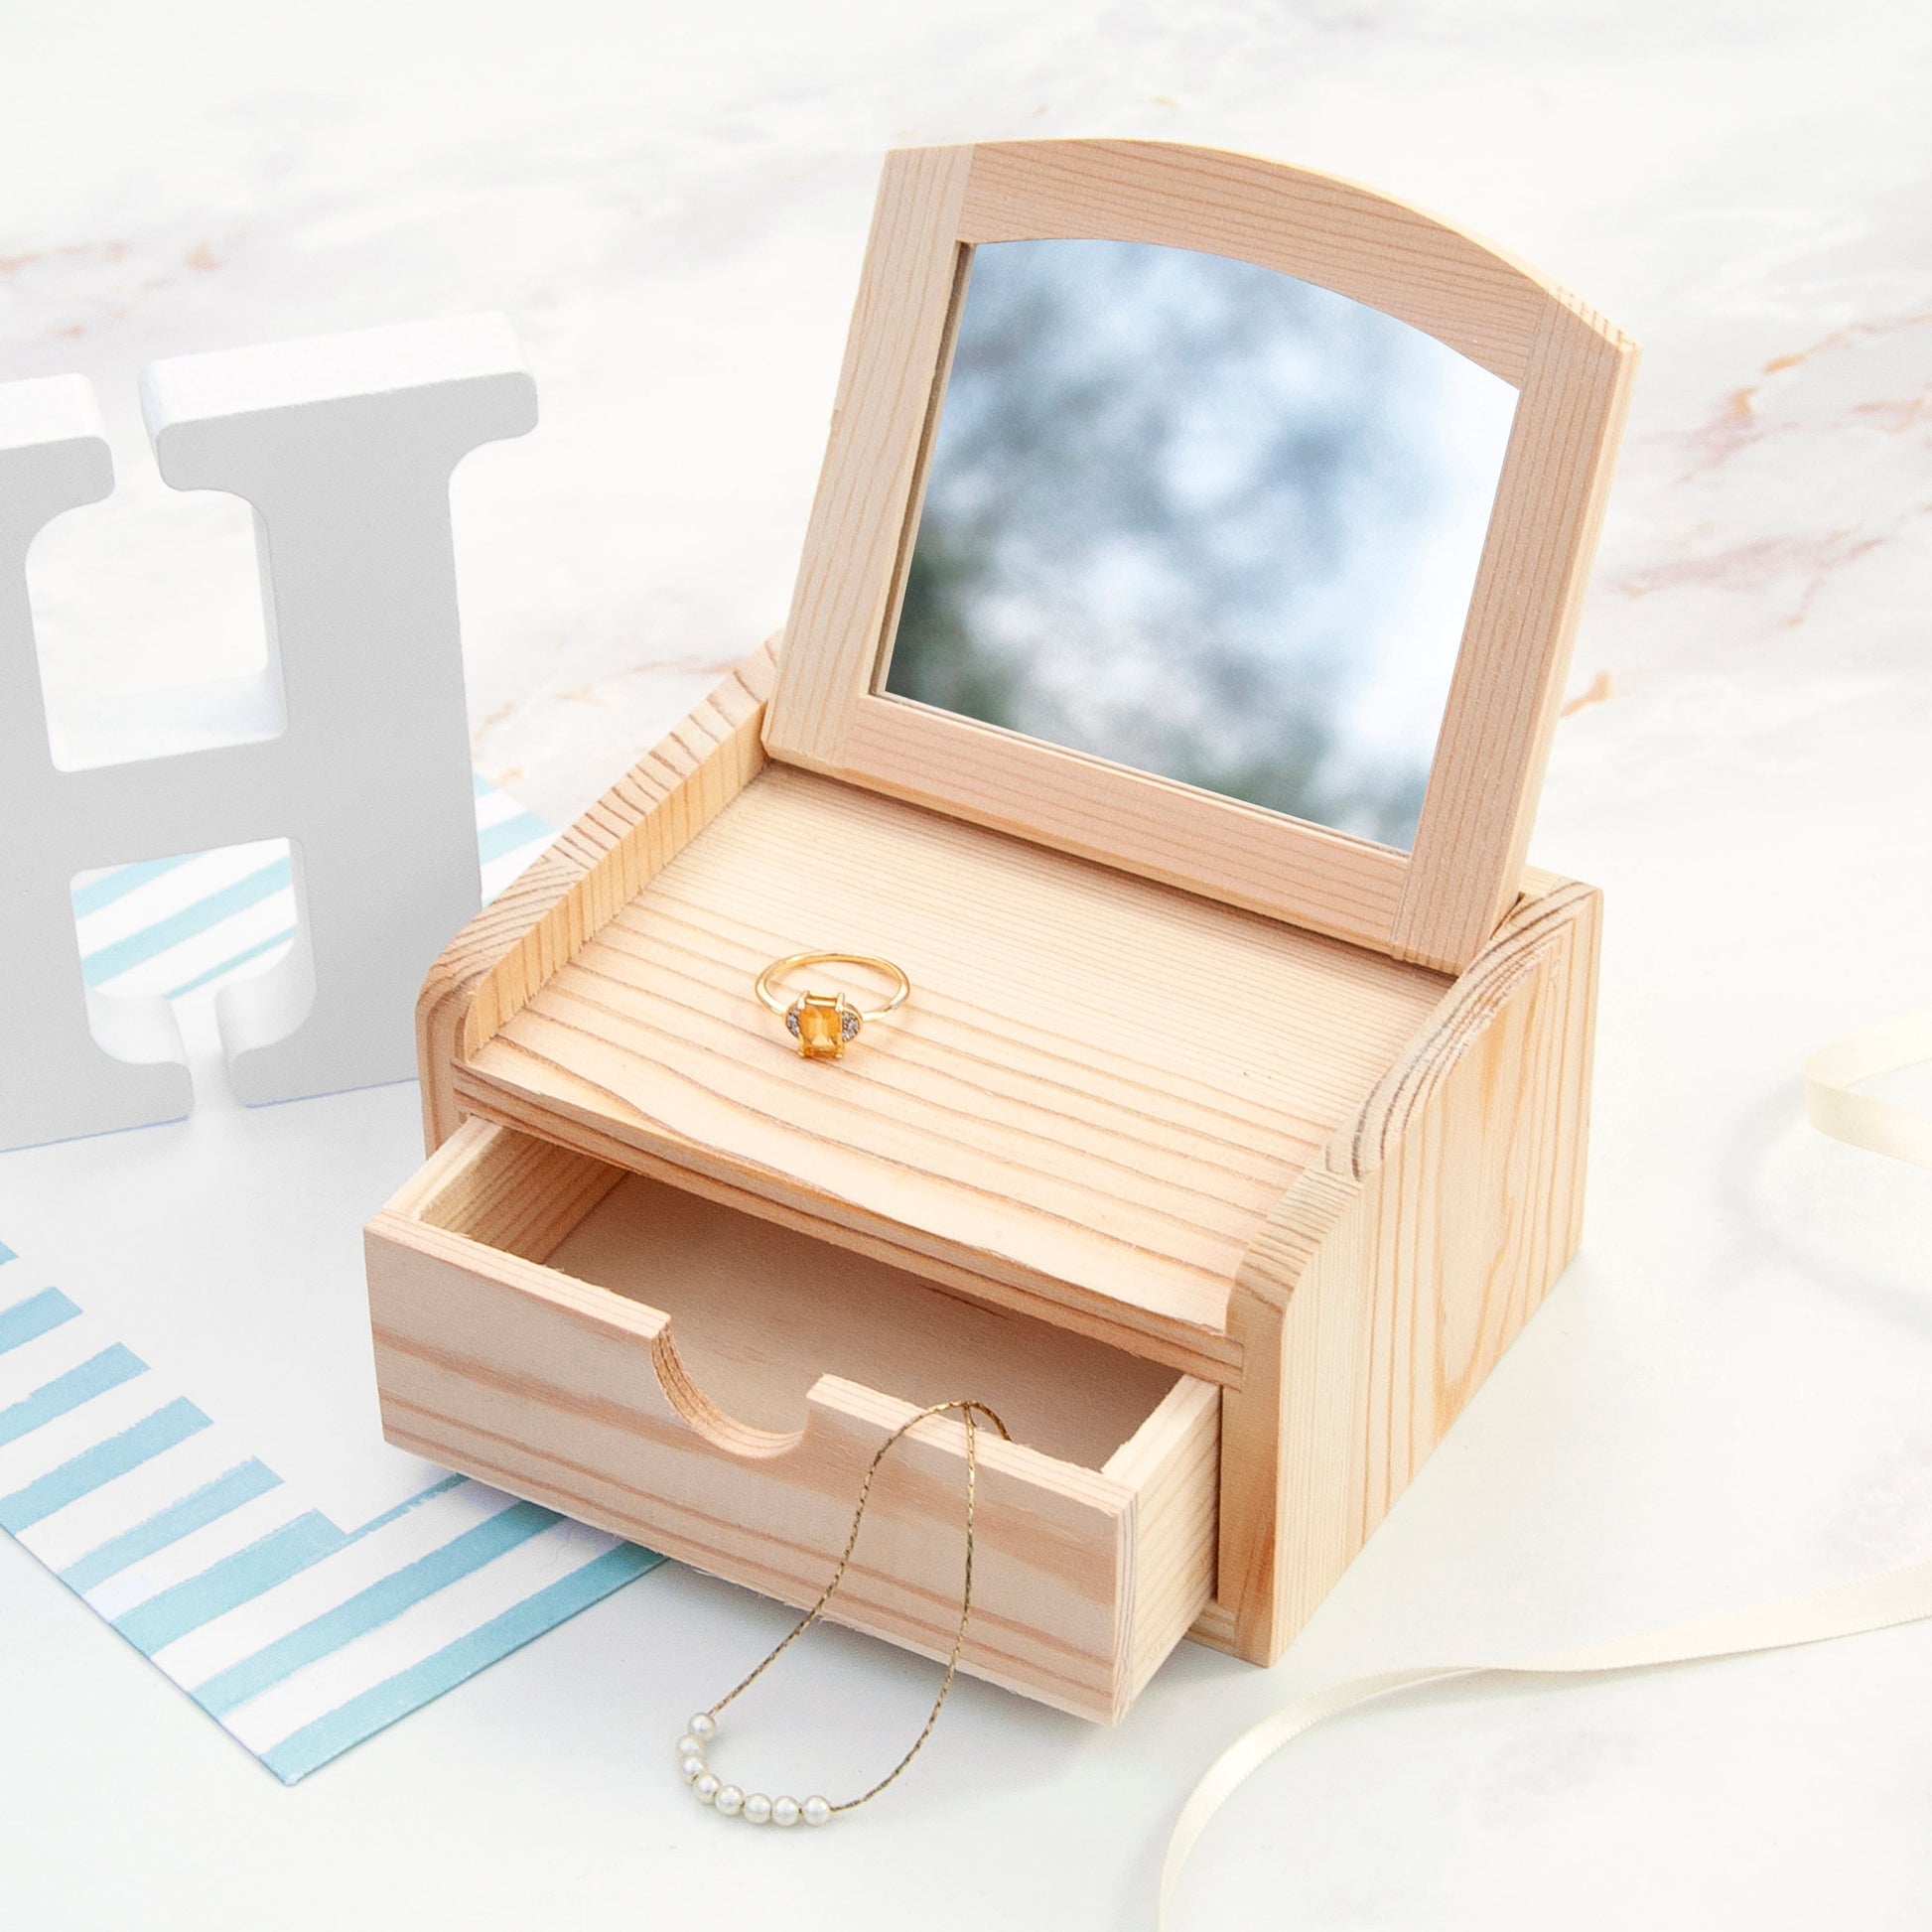 Personalized Jewellery Boxes & Storage - Personalized Kid’s Little Fox Jewellery Box 